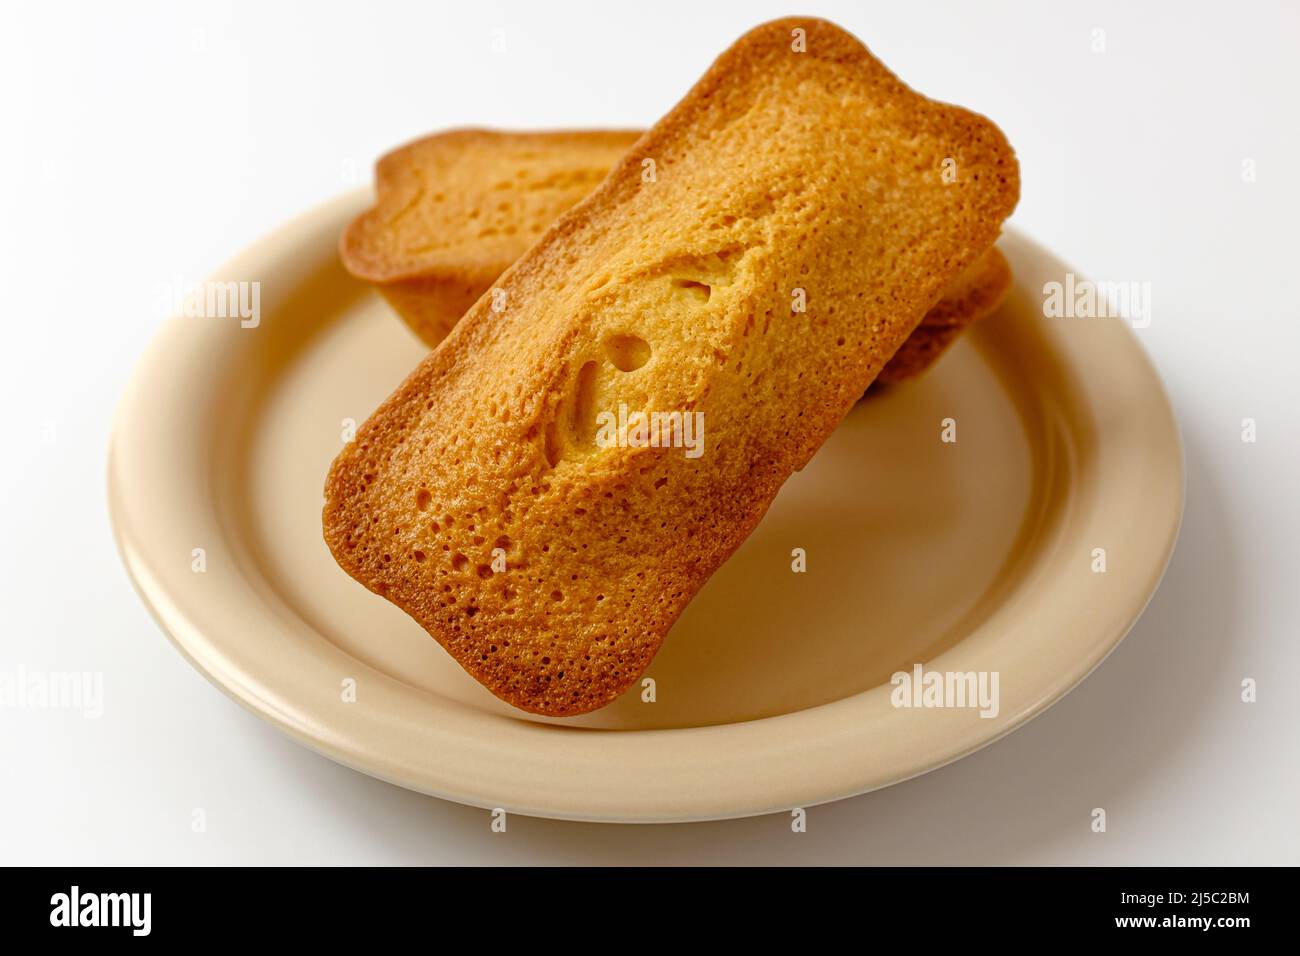 cultura gastronómica francesa, pan dulce y salado, pan de lingotes de oro Foto de stock